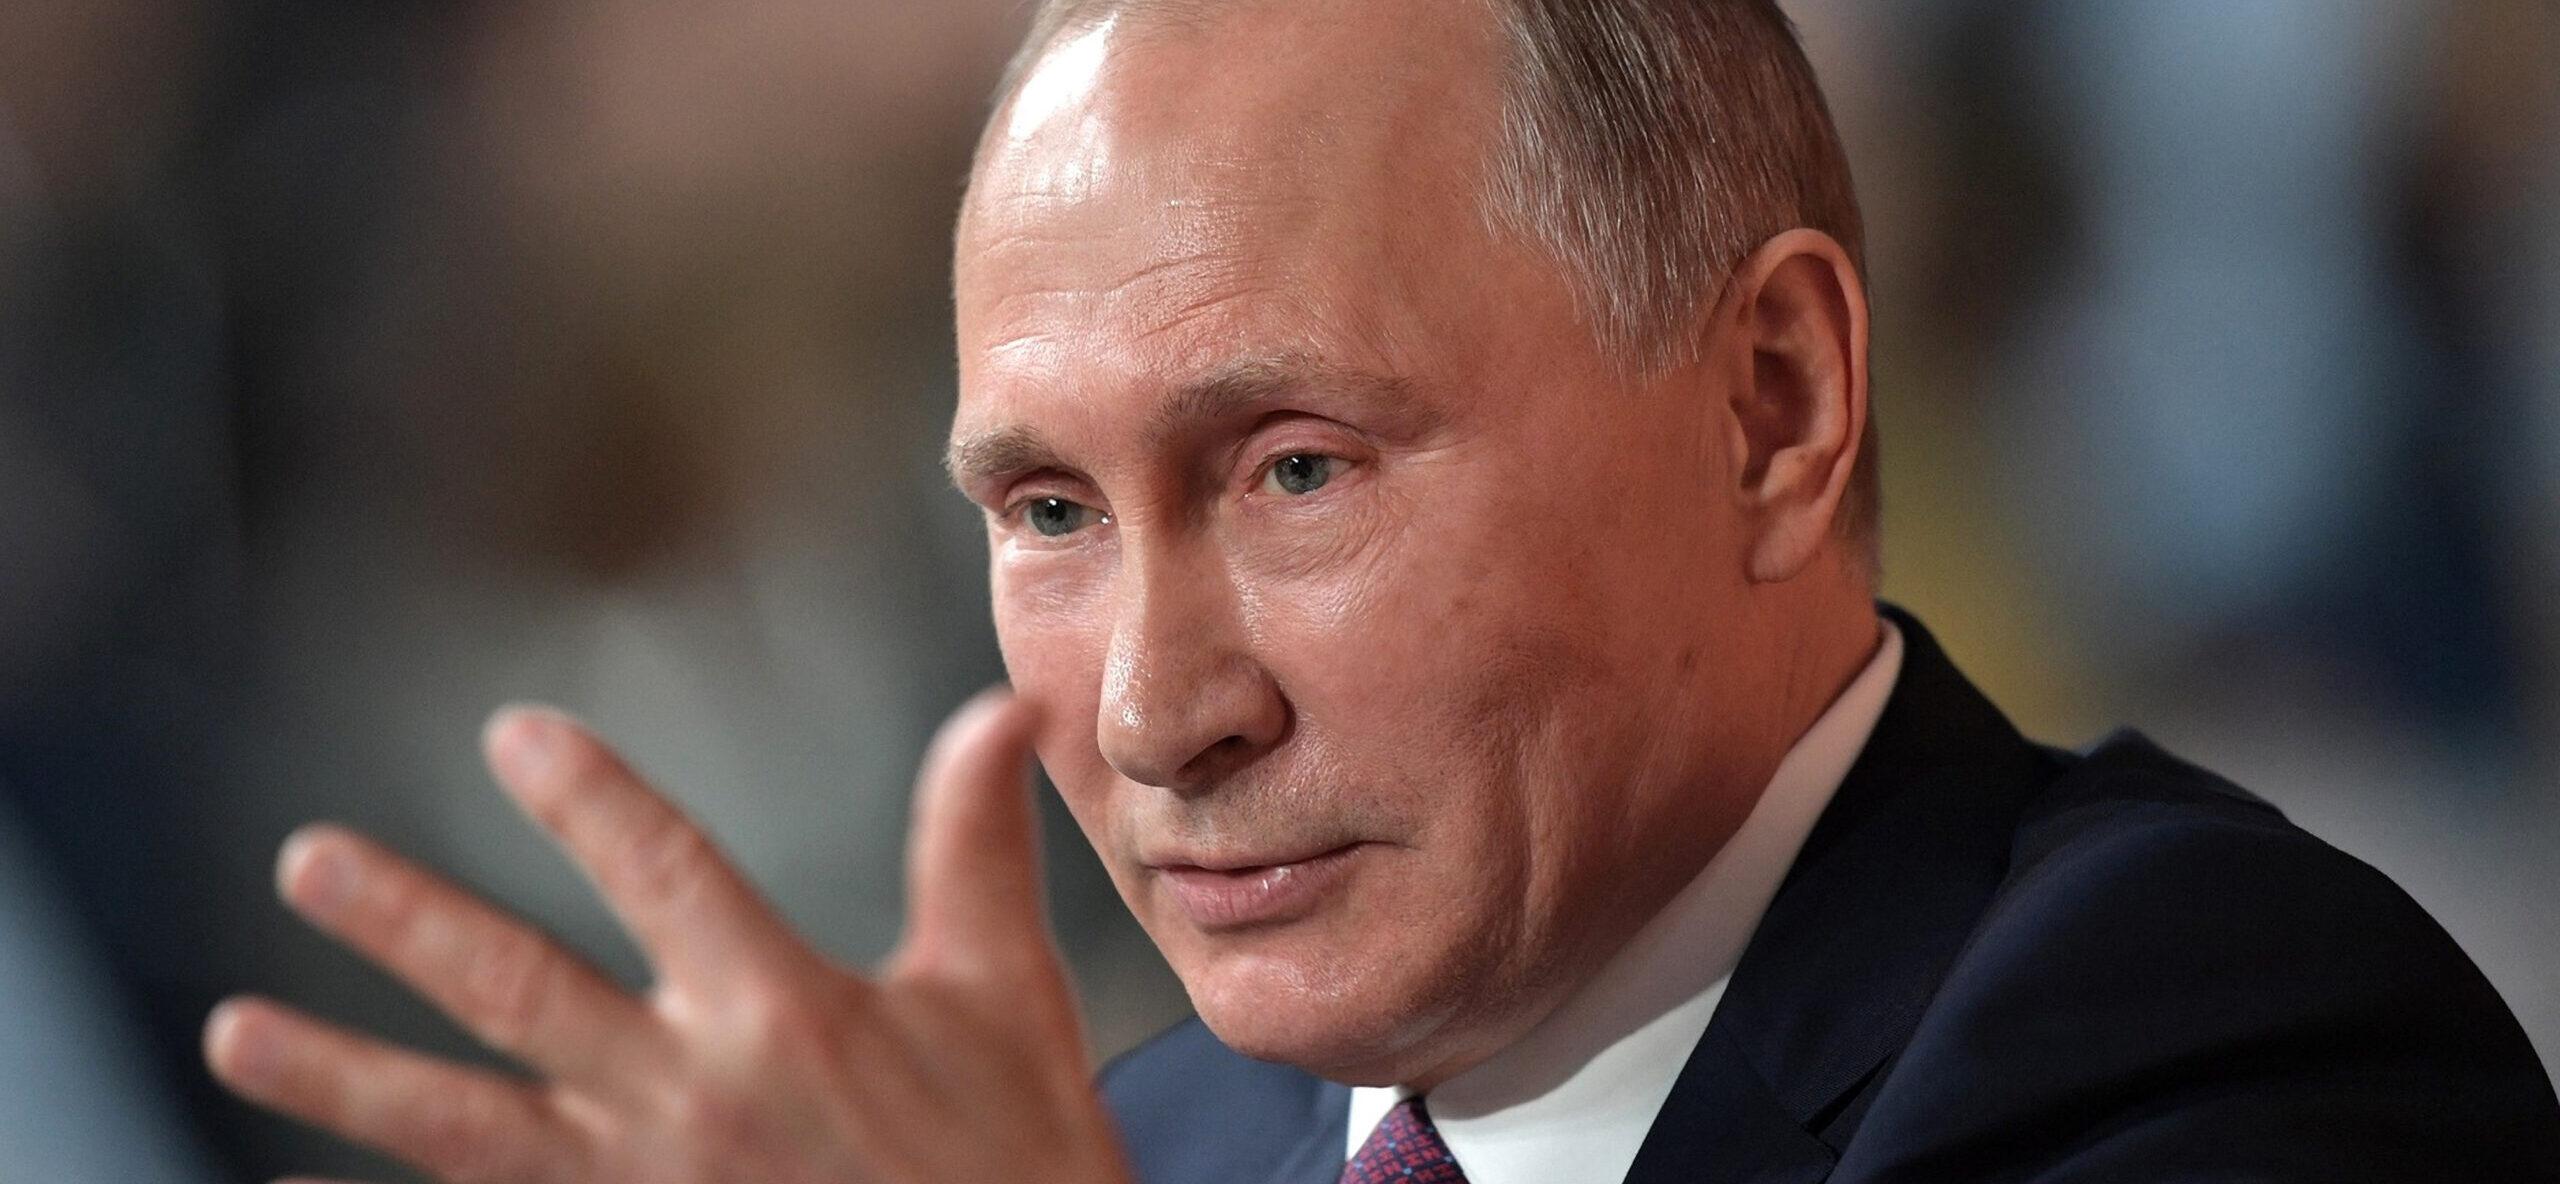 Vladamir Putin Tells Tucker Carlson Why Russia Attacked Ukraine [VIDEO]